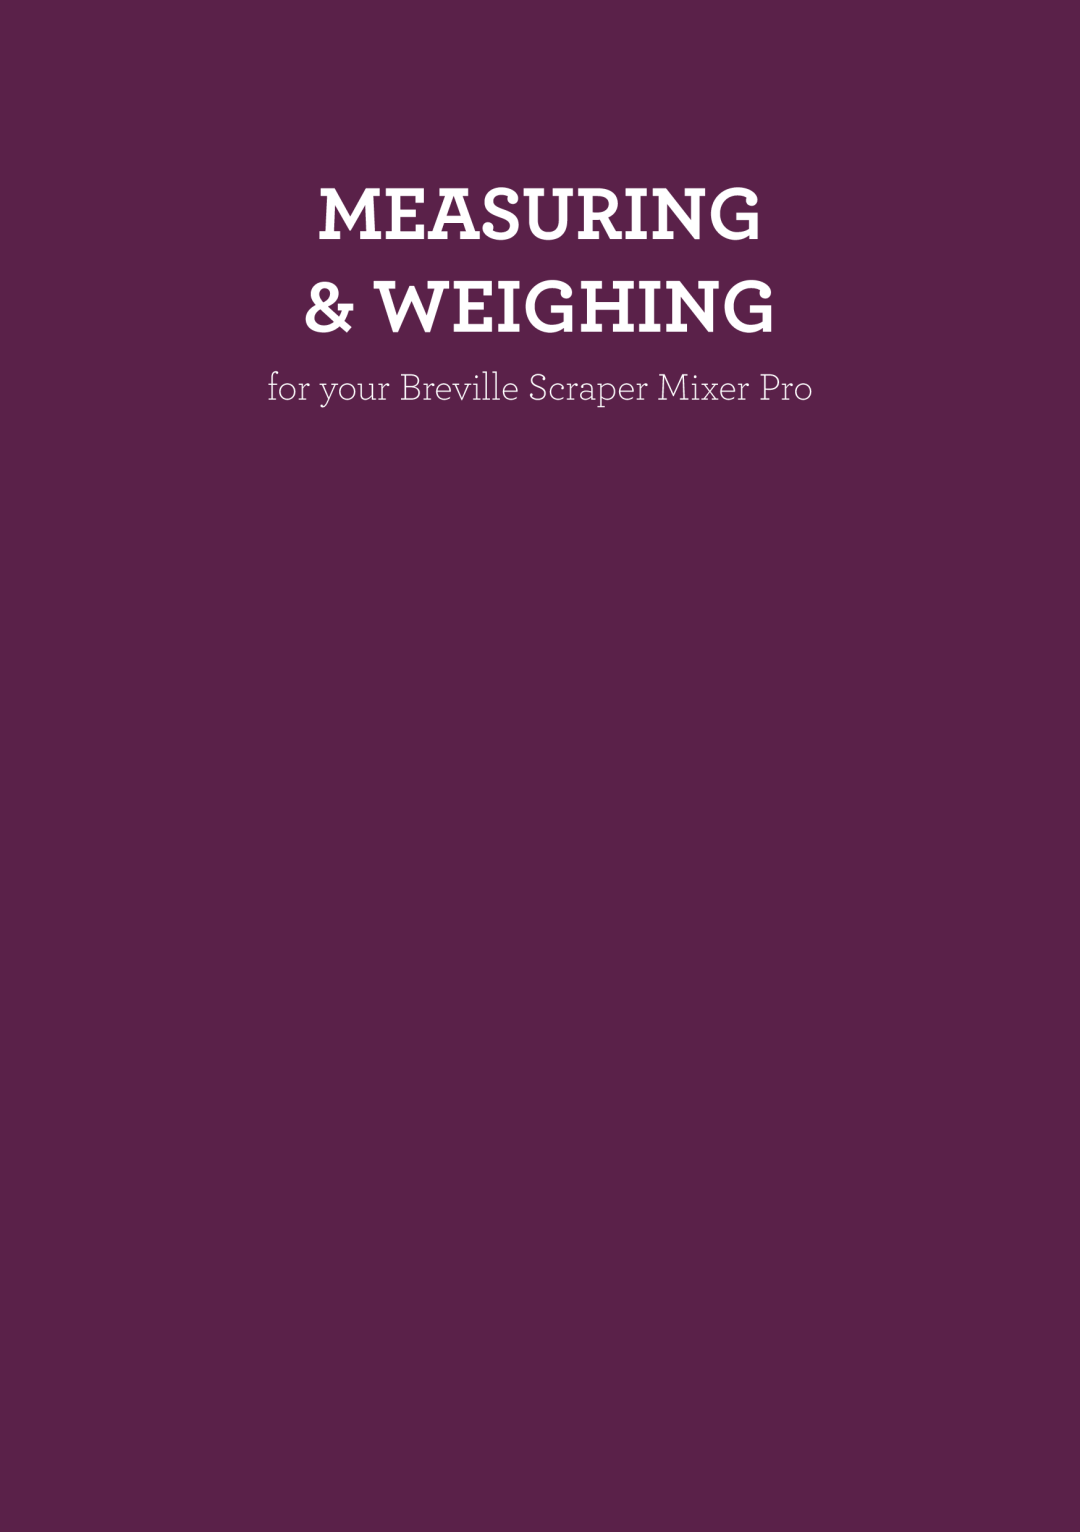 Breville BEM800 brochure for your Breville Scraper Mixer Pro, Measuring & Weighing 